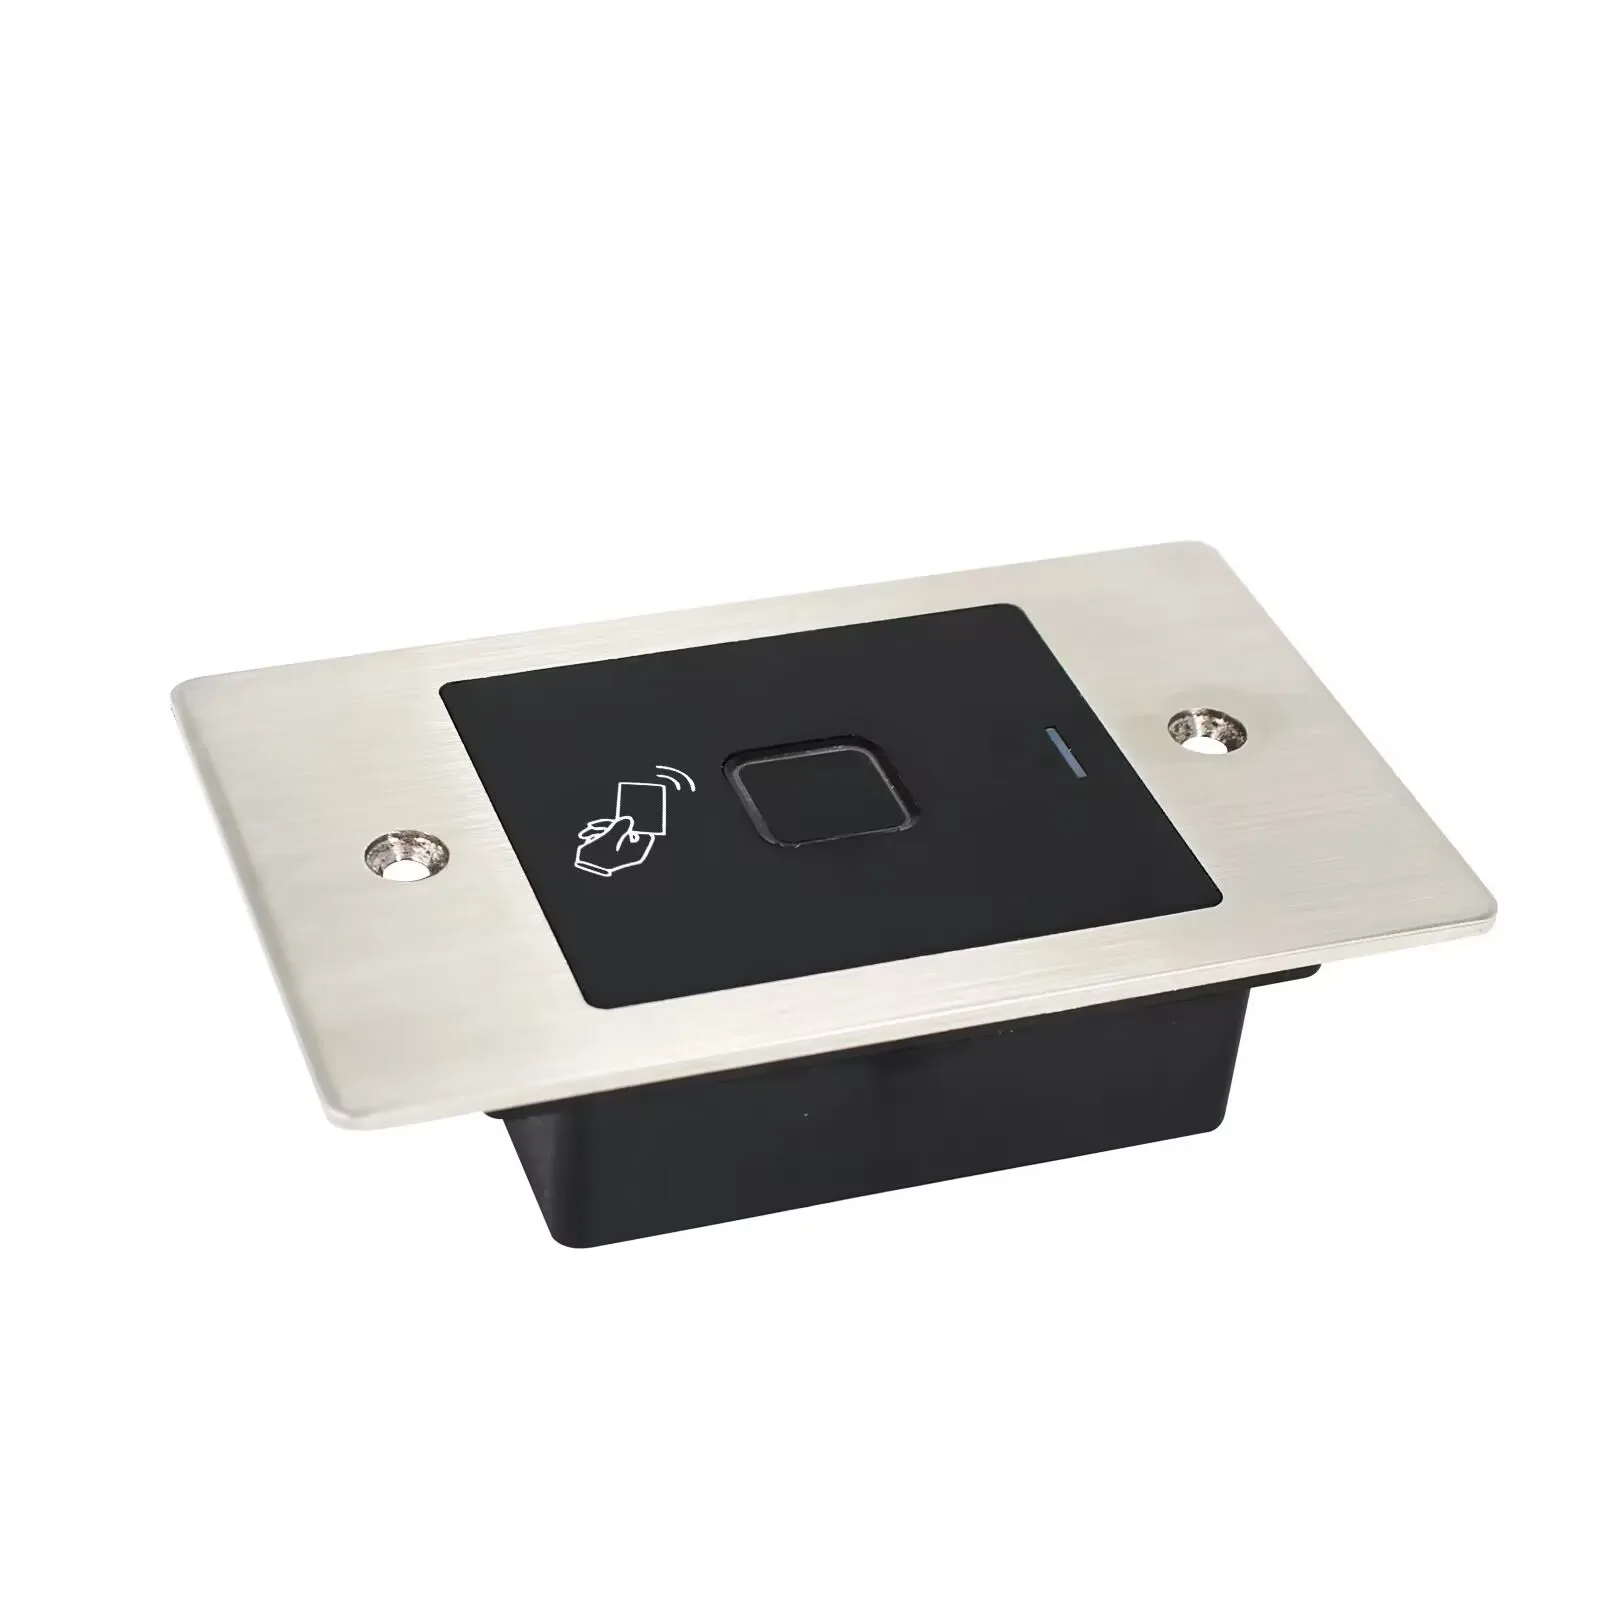 IP66 Waterproof Standalone Finger Print Access Control System Embedded Fingerprint Reader Controller